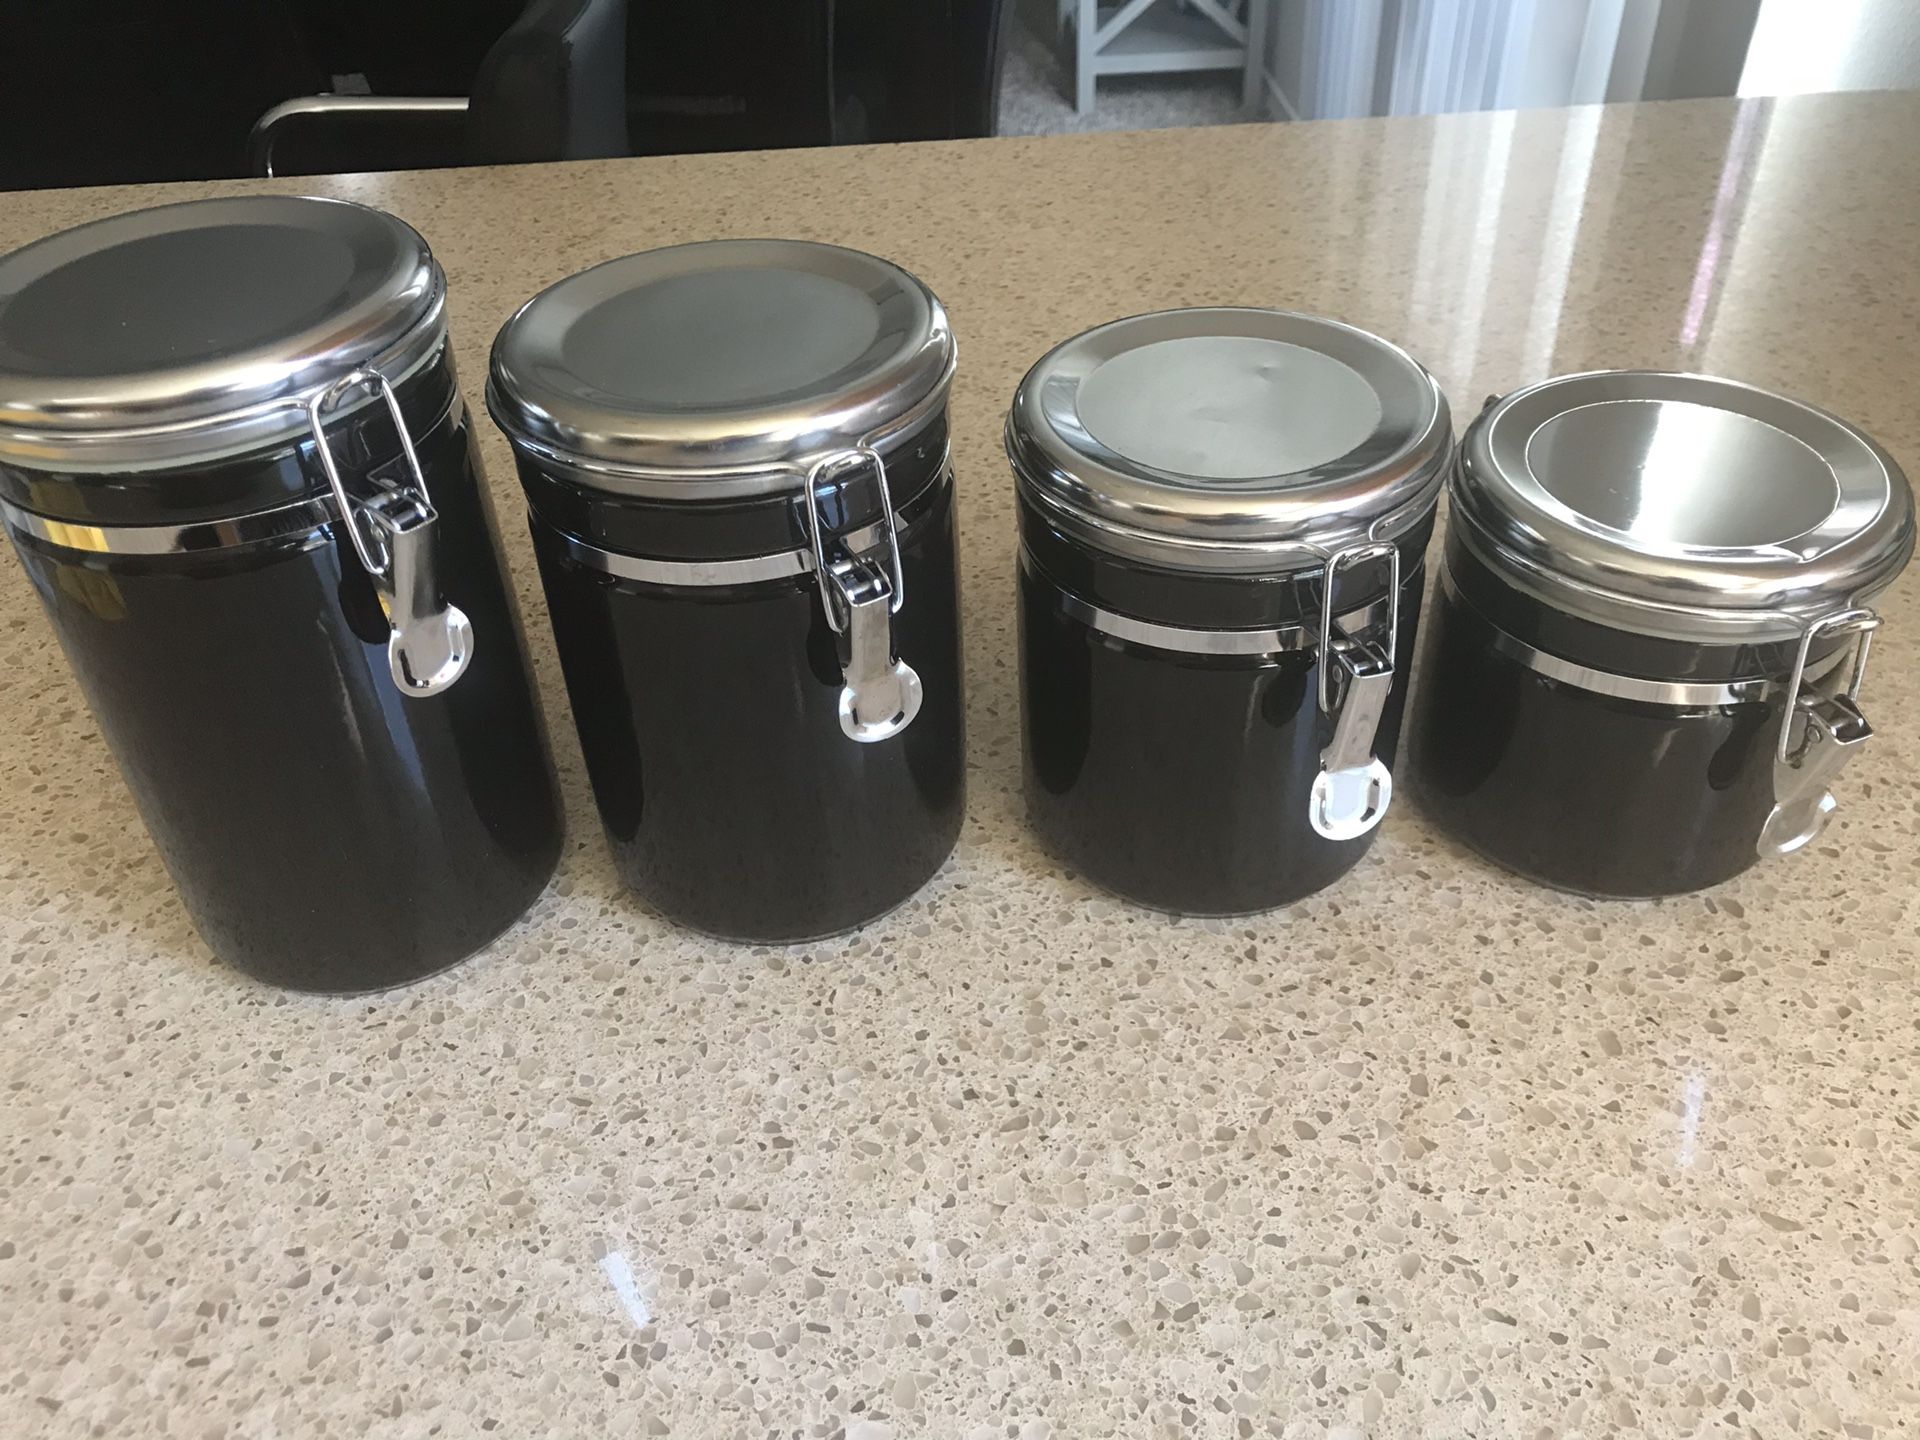 Pantry jars